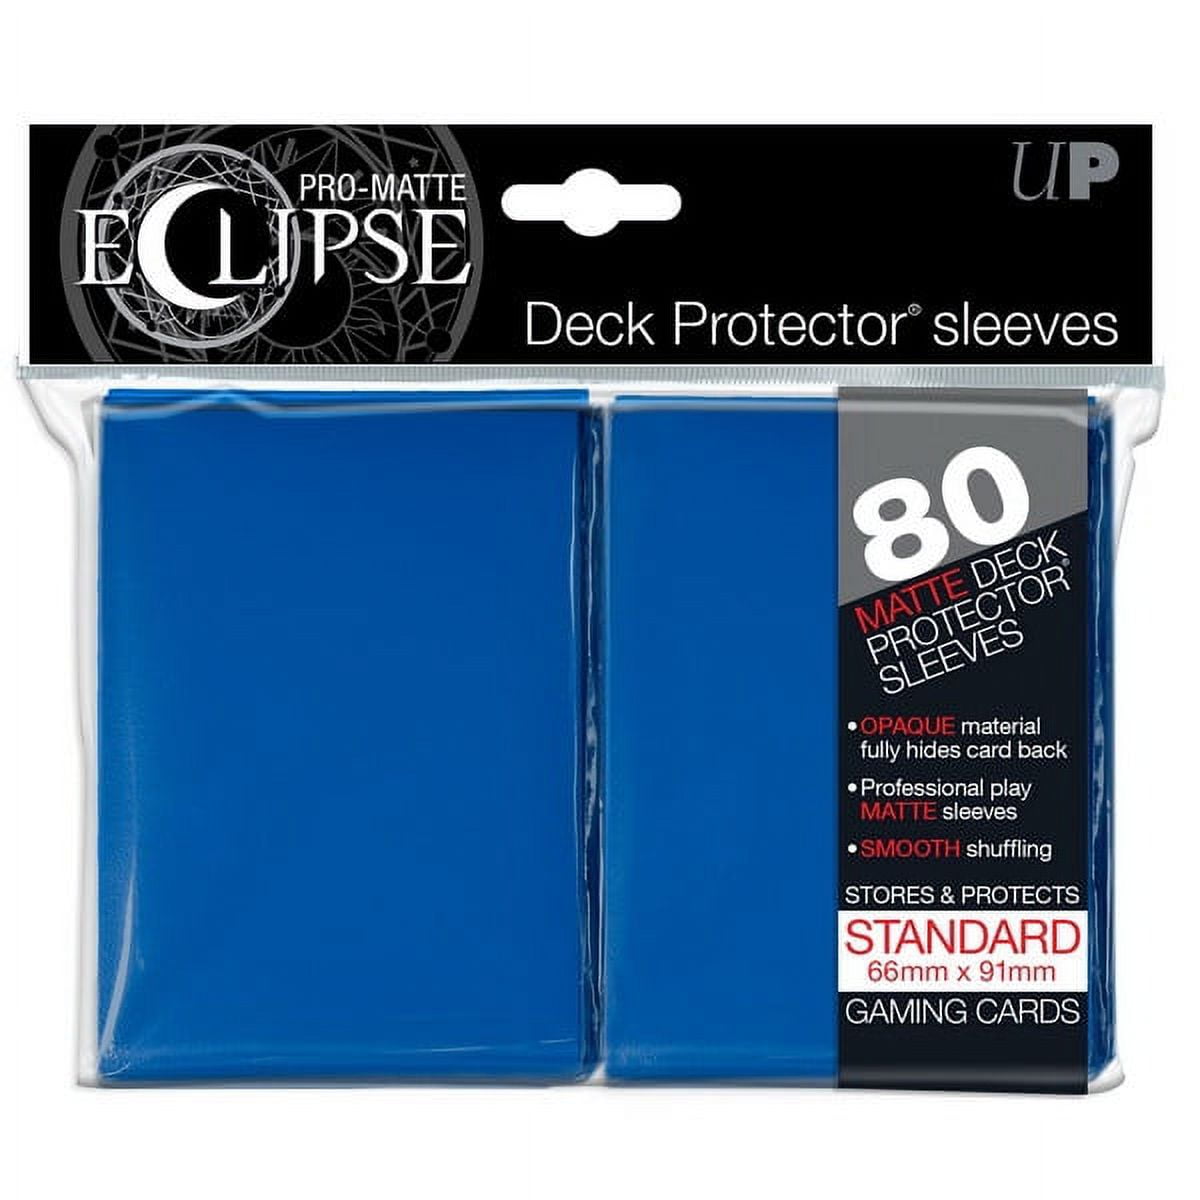 Picture of Deck Protectors - Pro Matte - Eclipse Blue (8 packs per display)